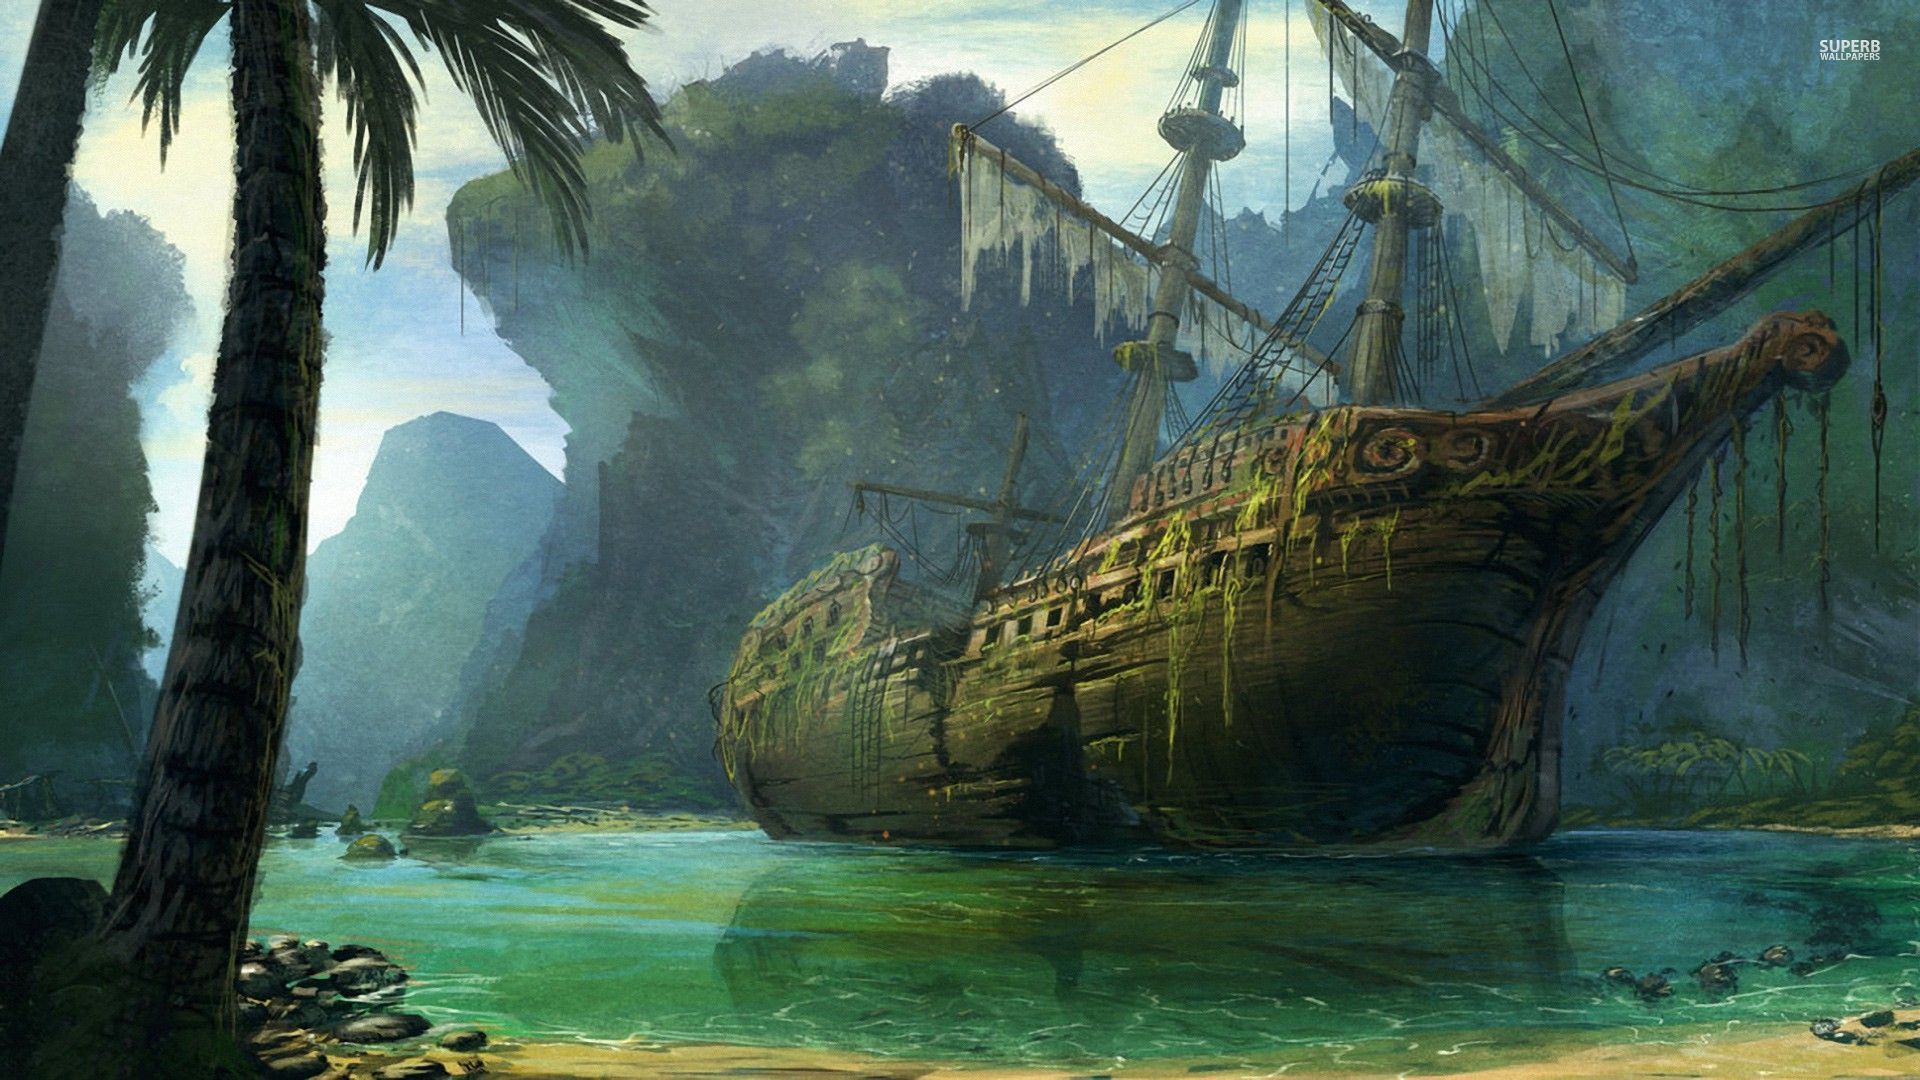 Pirate ship wreck wallpaper - Fantasy wallpapers - #29001